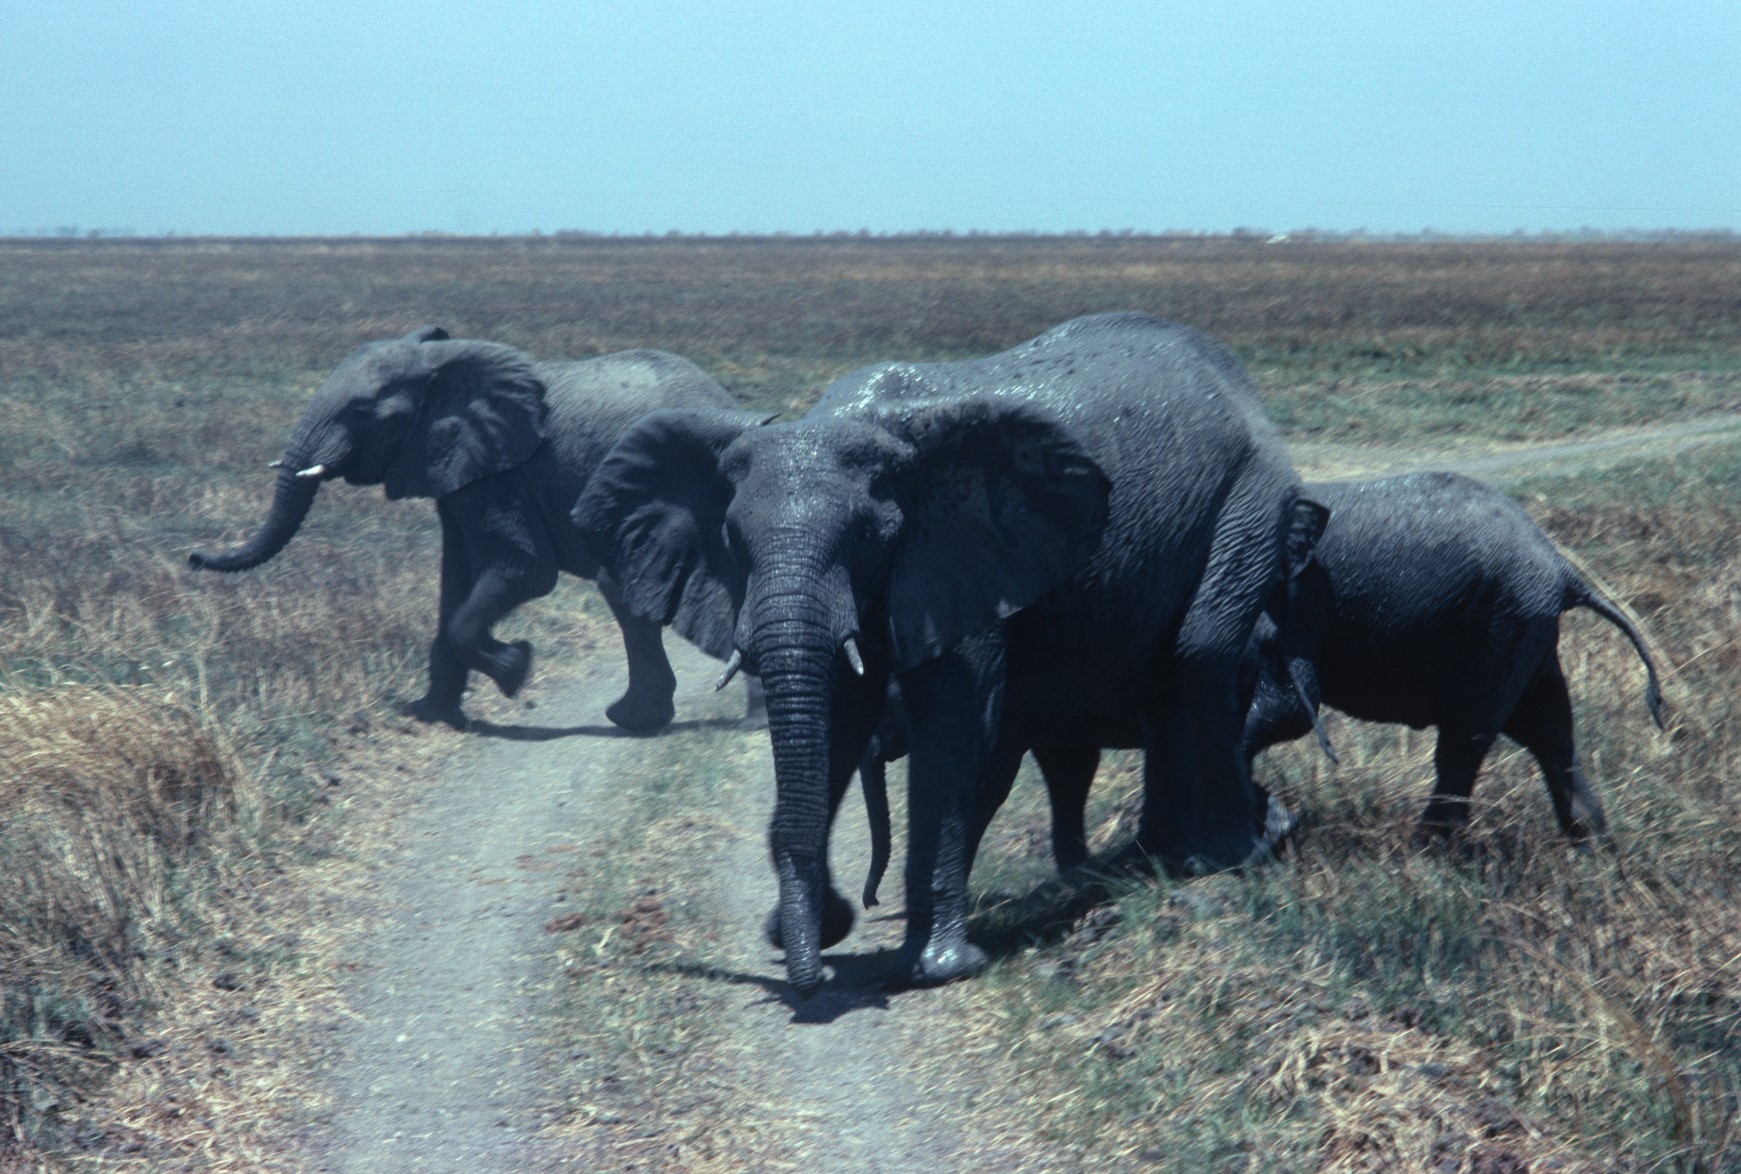 Elephants on the road 33pc